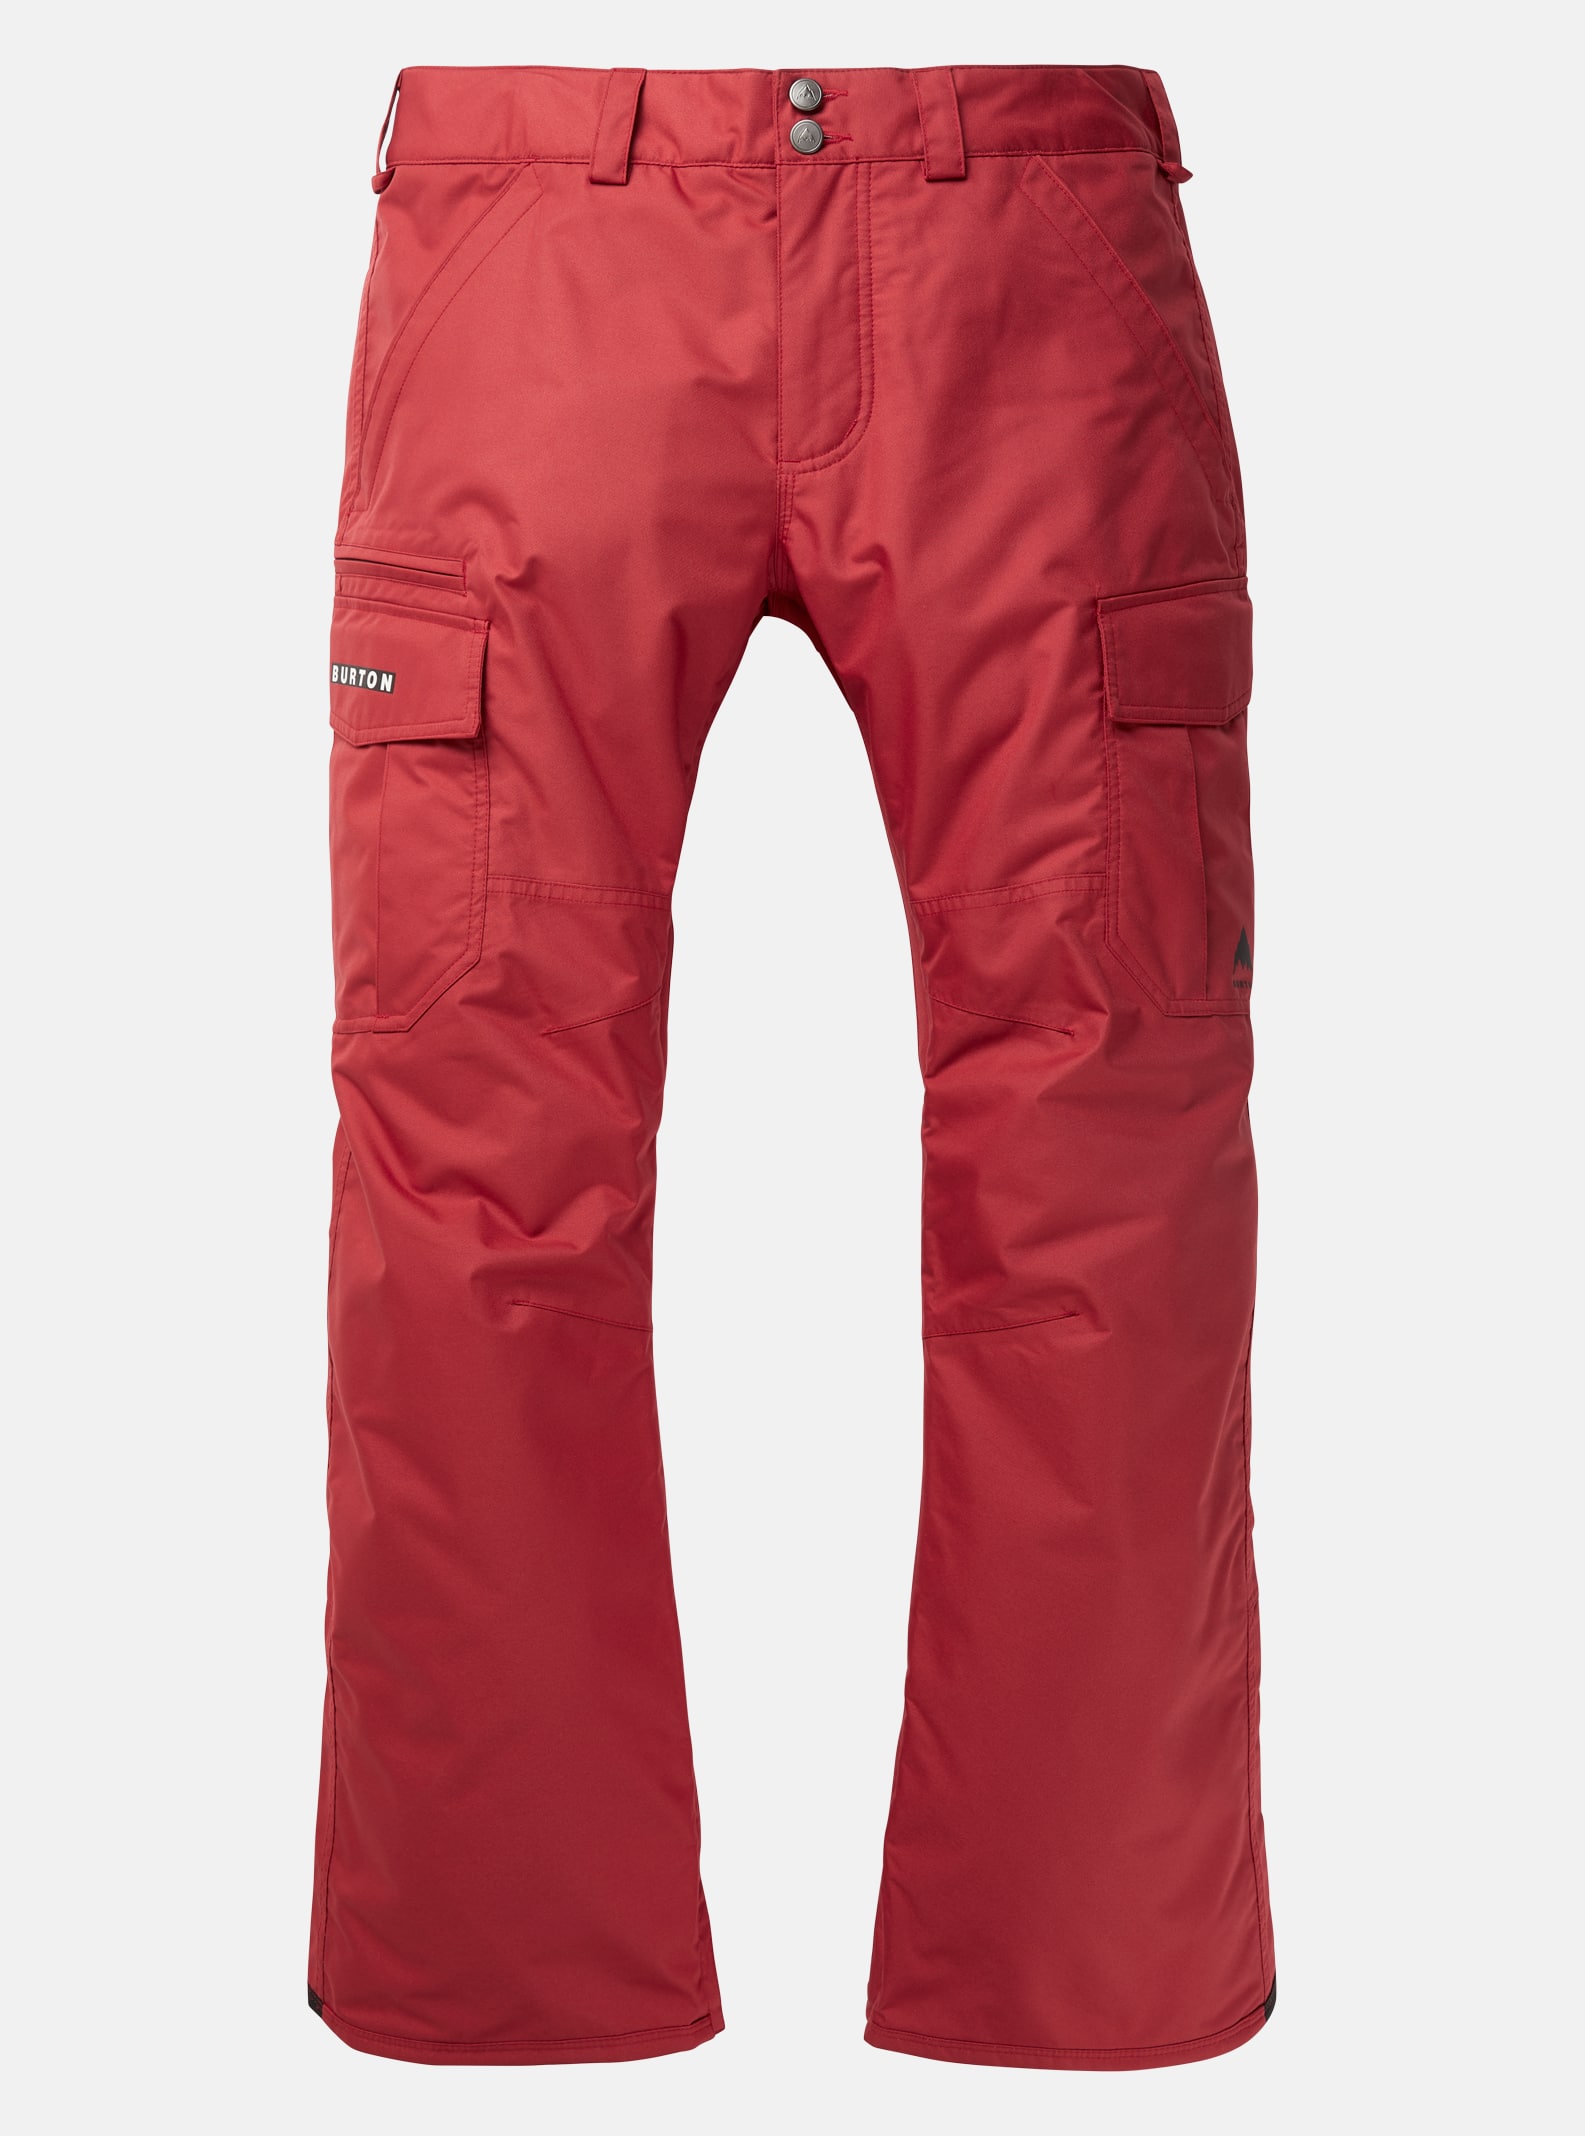 Burton Cargo Shell Snowboard Pants (Men's)